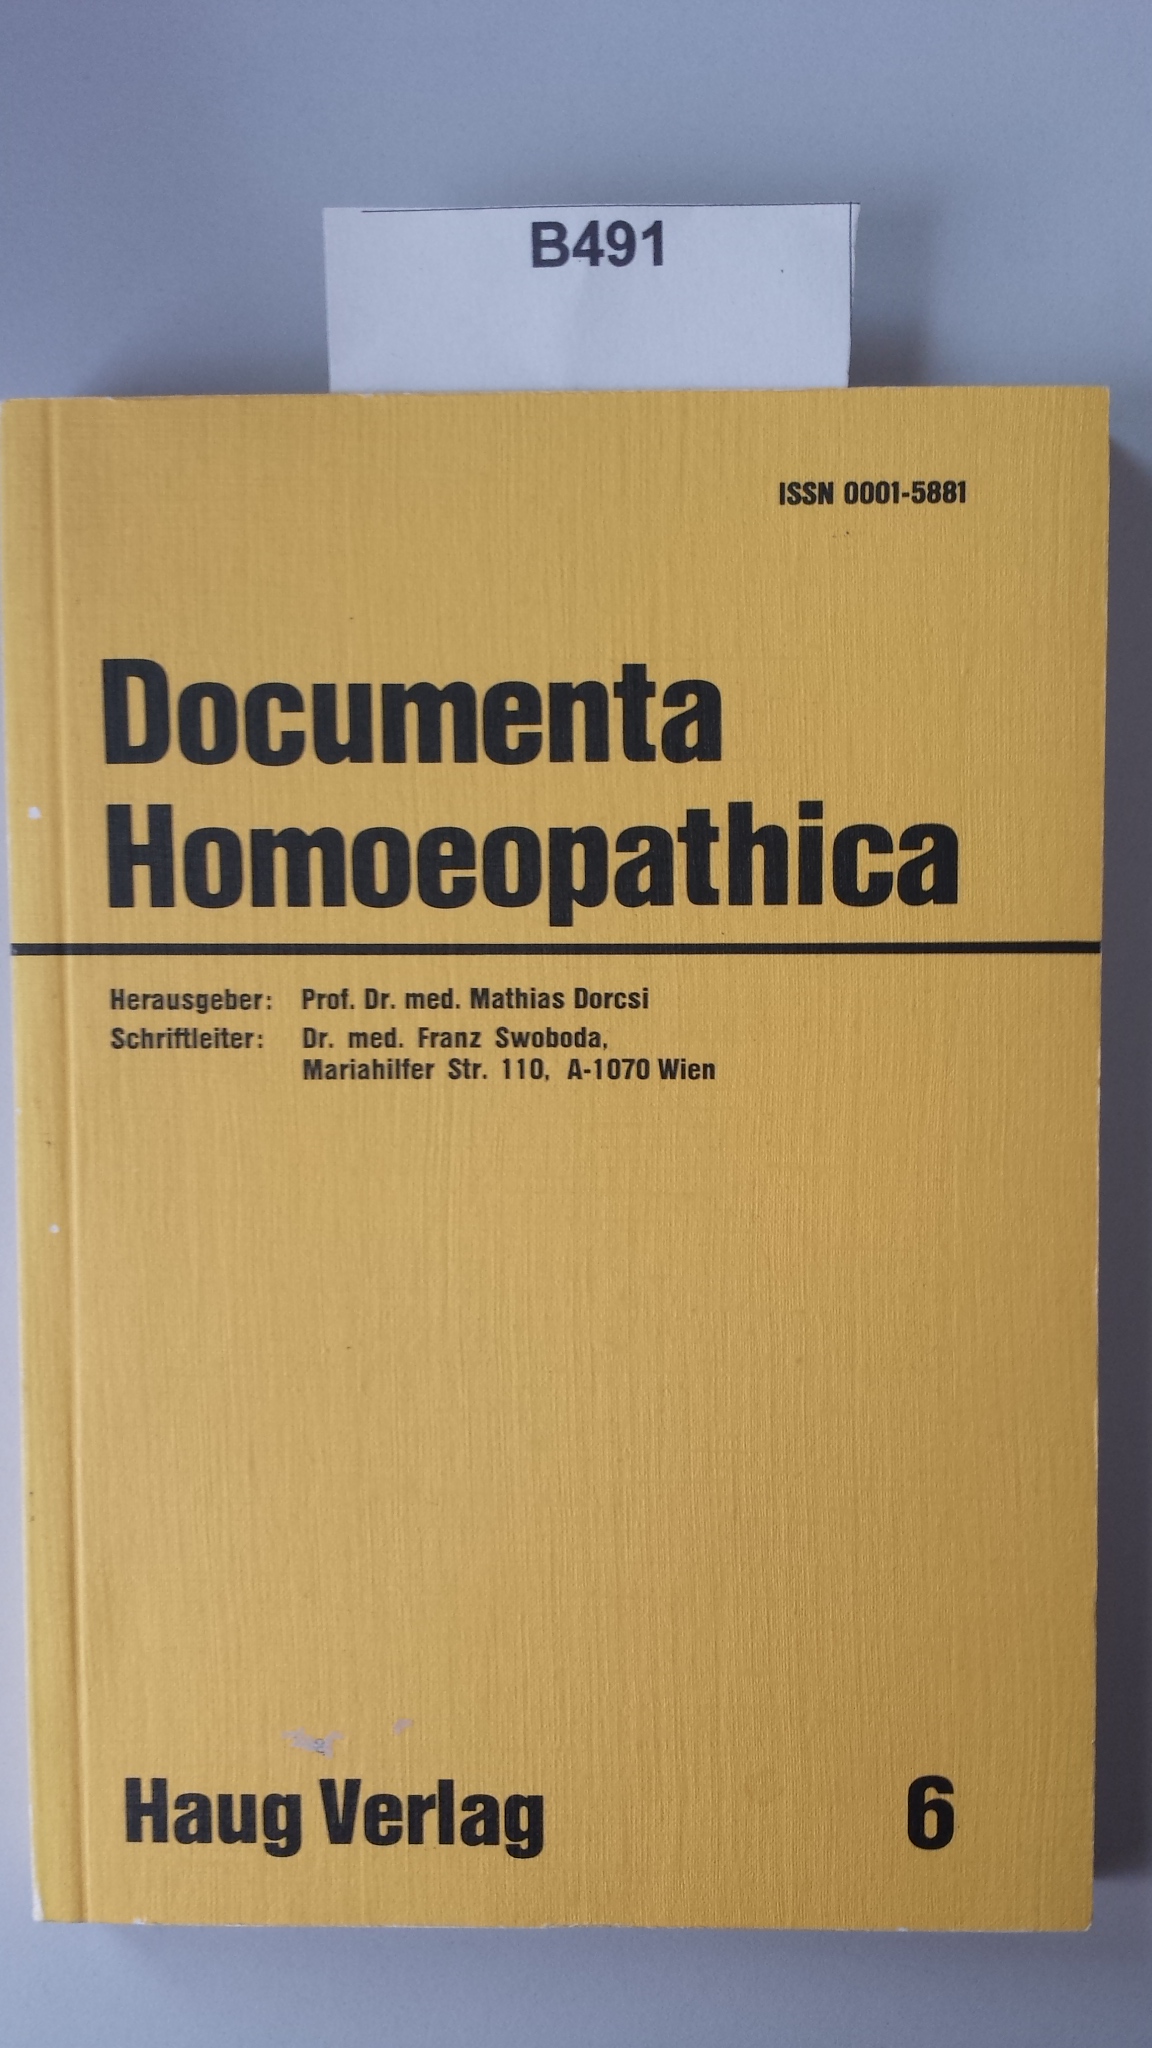 Buch: B491 Documenta Homoeopathica 6